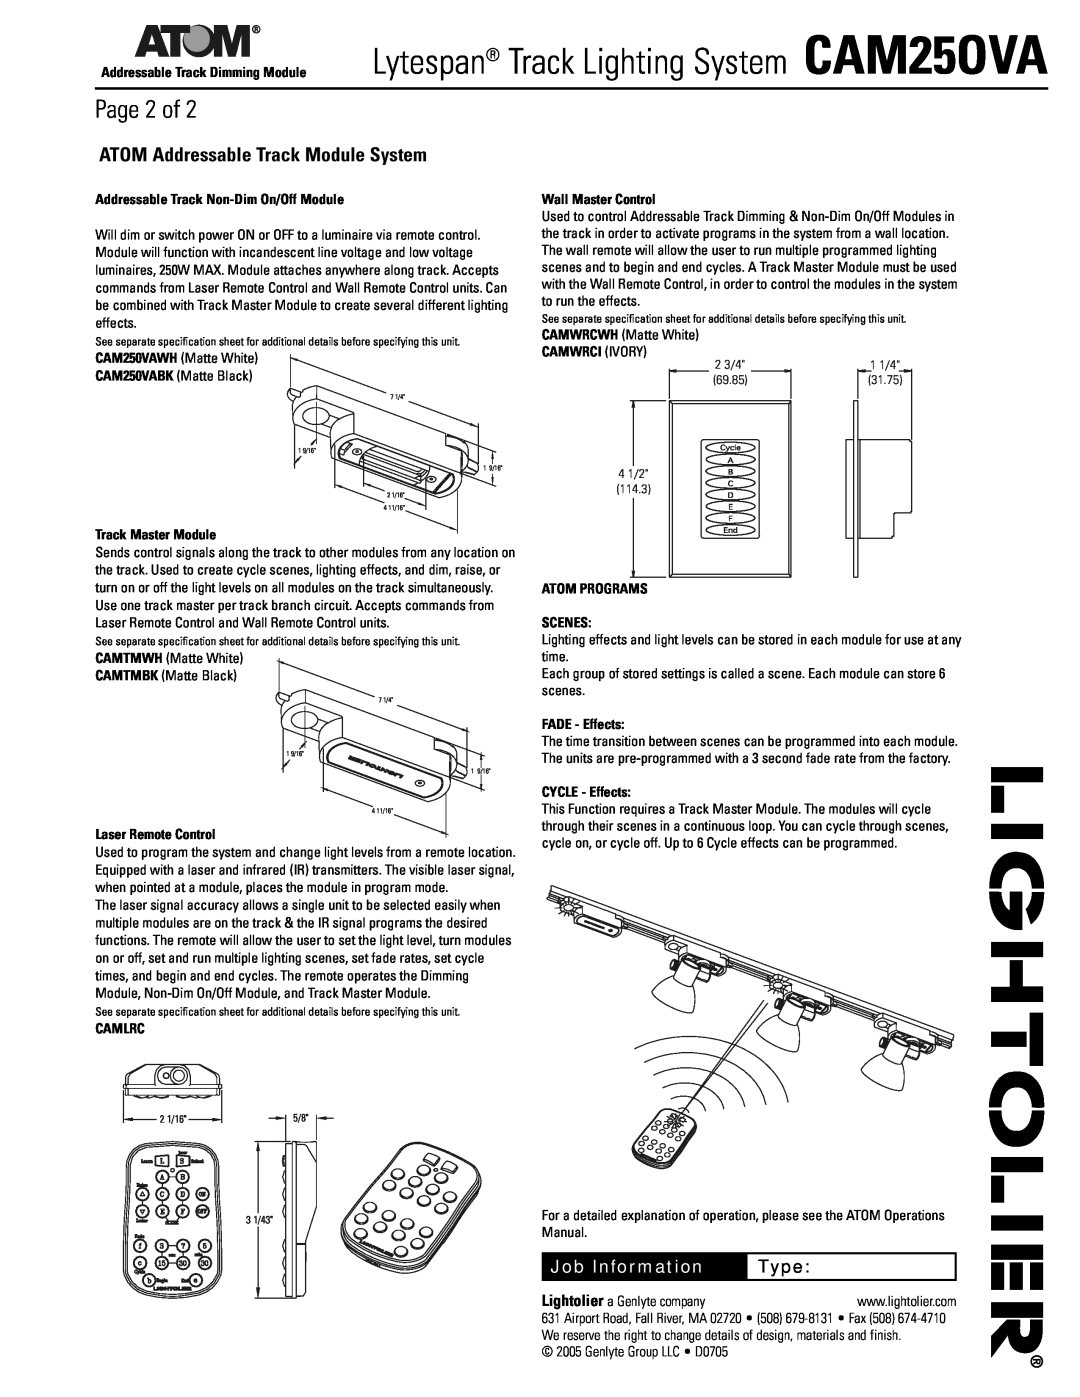 Lightolier CAM25OVA dimensions Page 2 of, ATOM Addressable Track Module System, Job Information, Type 